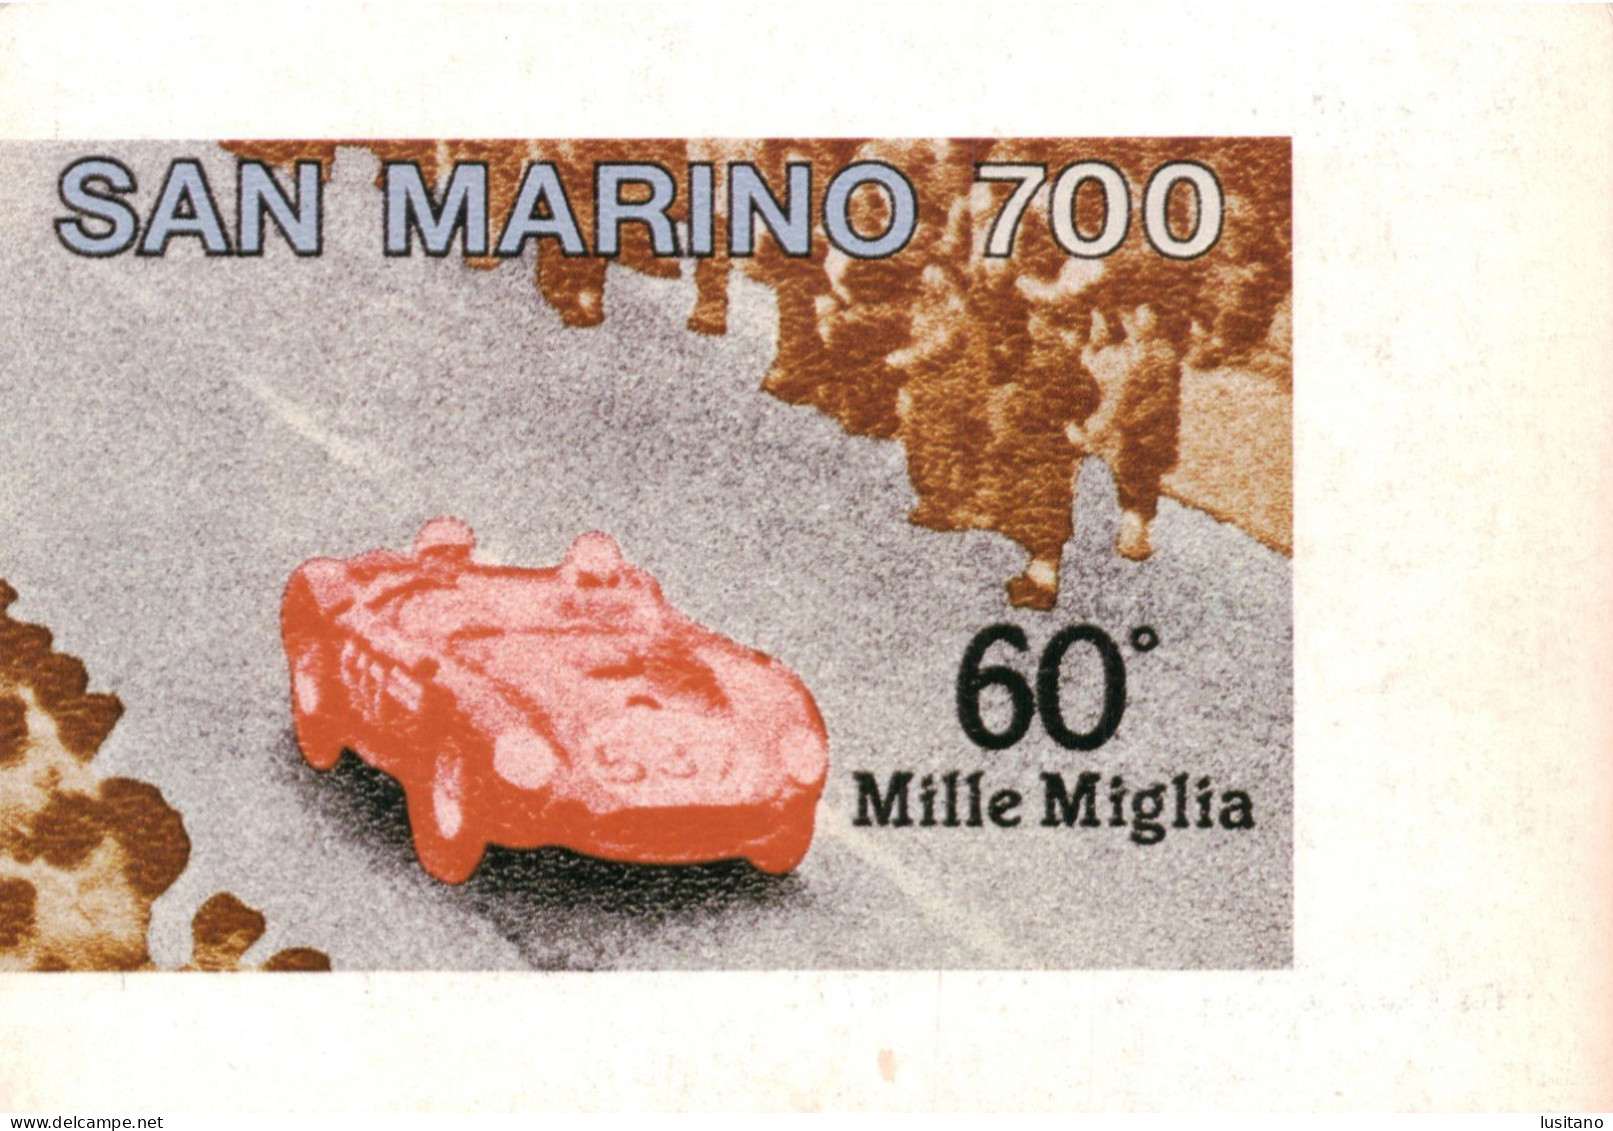 San Marino, 60º Mille Miglia, 1987, Race Racing Rally Car Motorsports Motorsports Card Nº0771 (1000) - Rally's